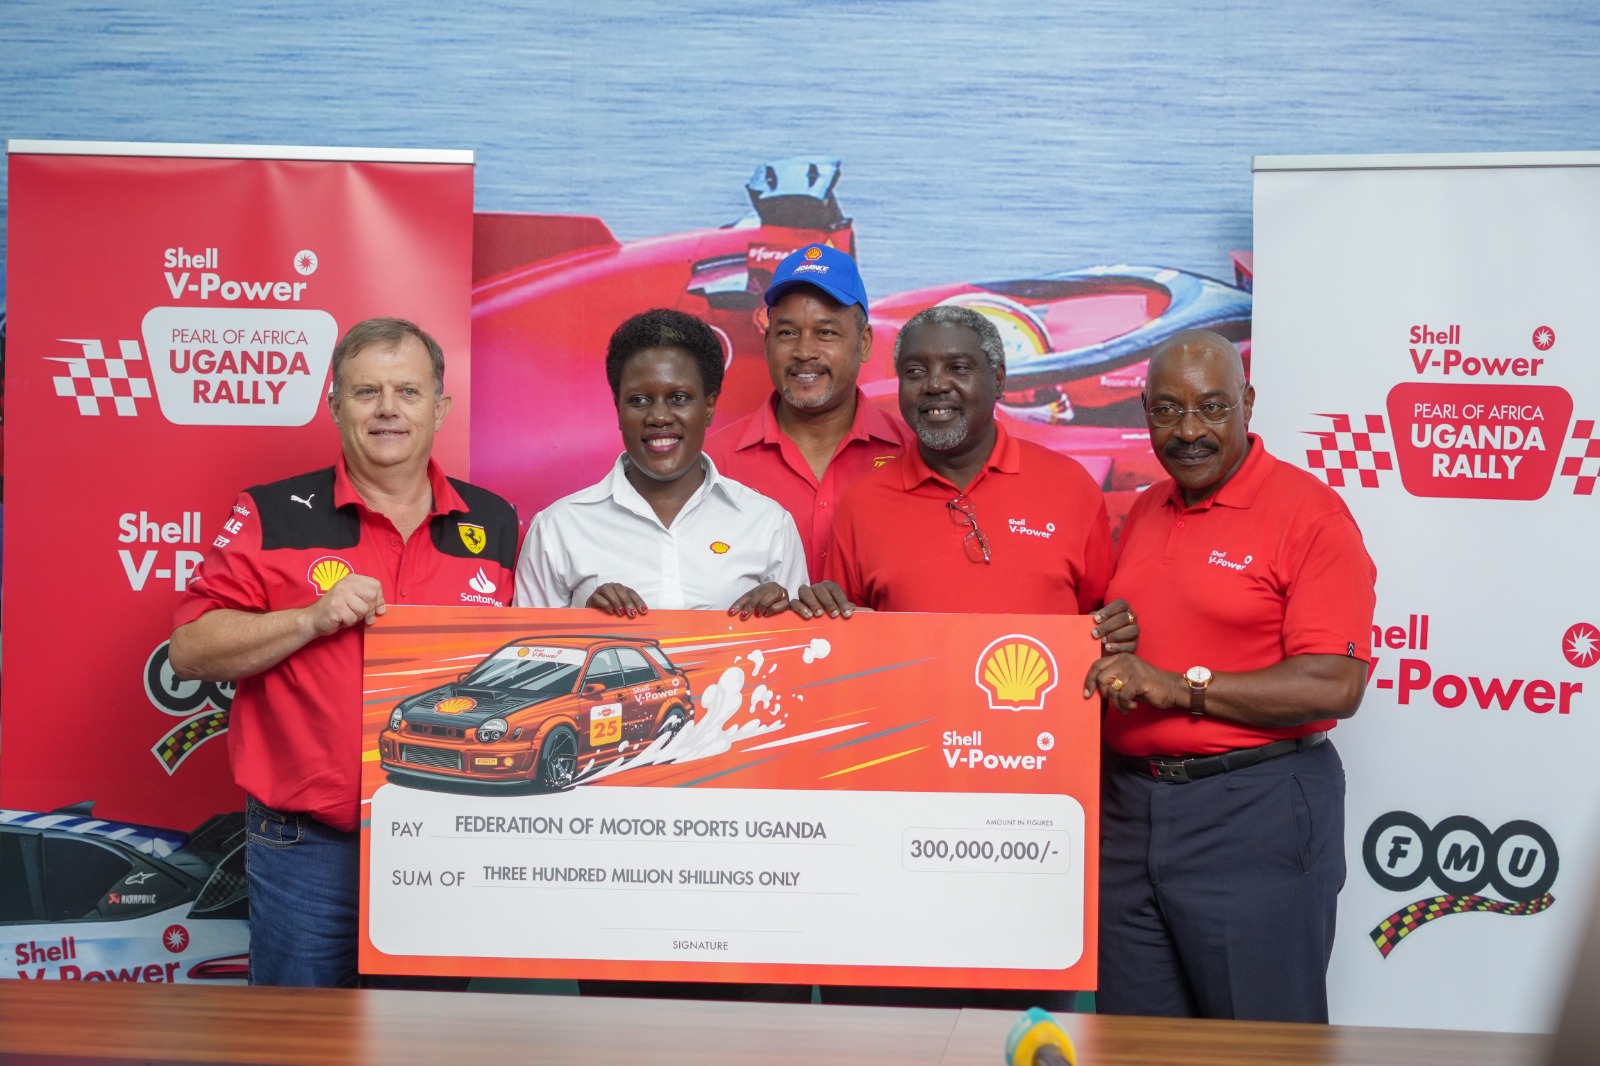 Vivo Energy reaffirms ‘Pearl of Africa Uganda Rally’ title sponsorship.